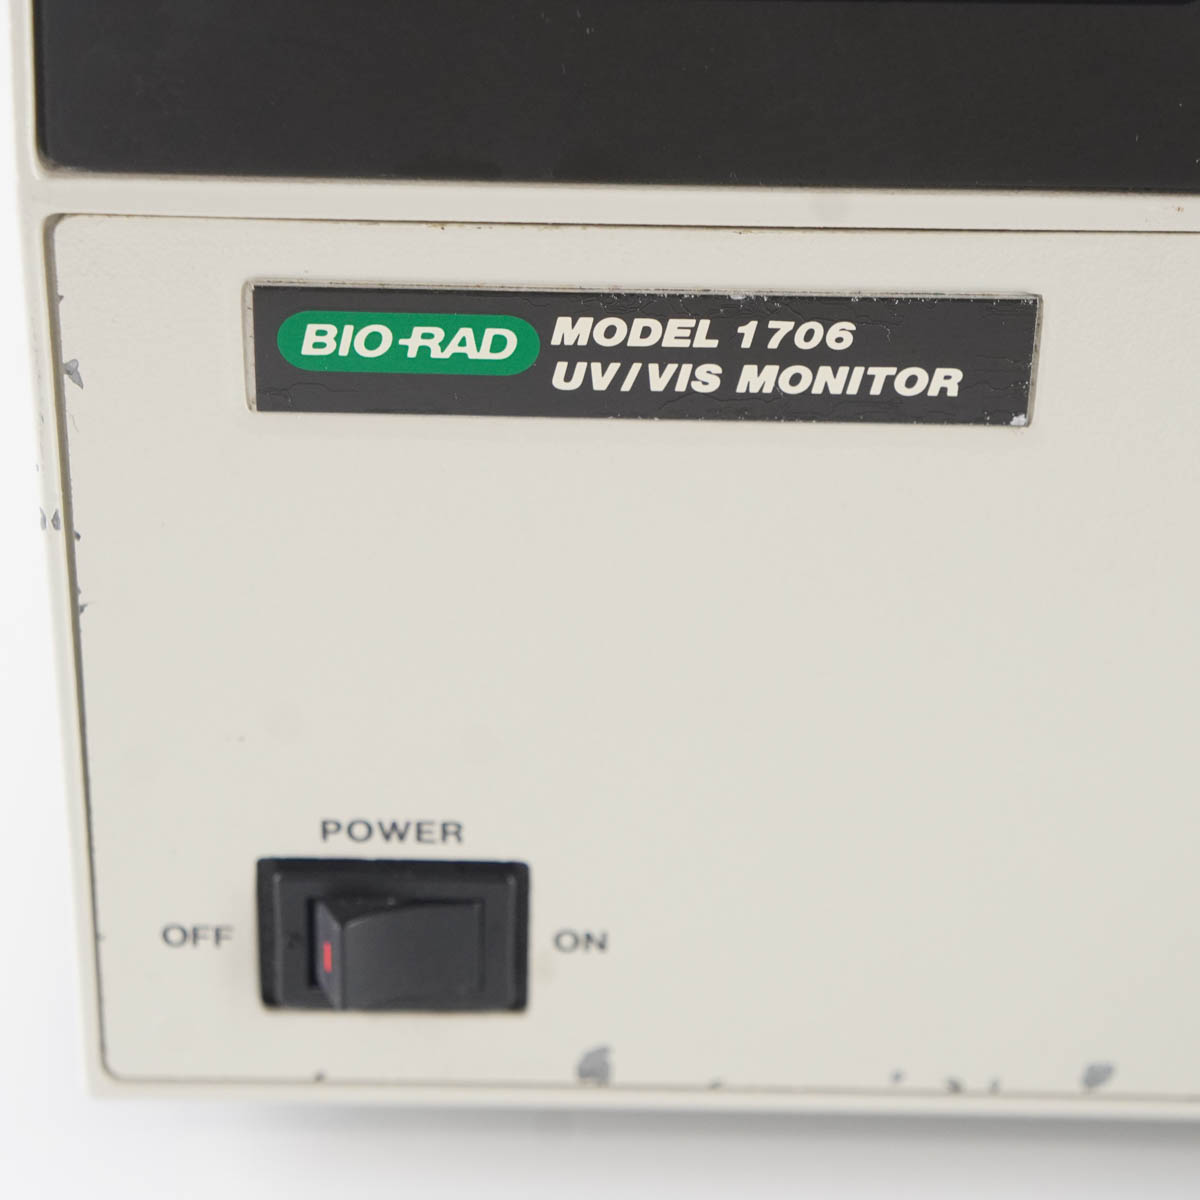 [DW]USED 8日保証 セット BIO-RAD 1706 1350 HPLC 液クロ UV VIS MONITOR PUMP 液体クロマトグラフ [ST04523-0028] - 4